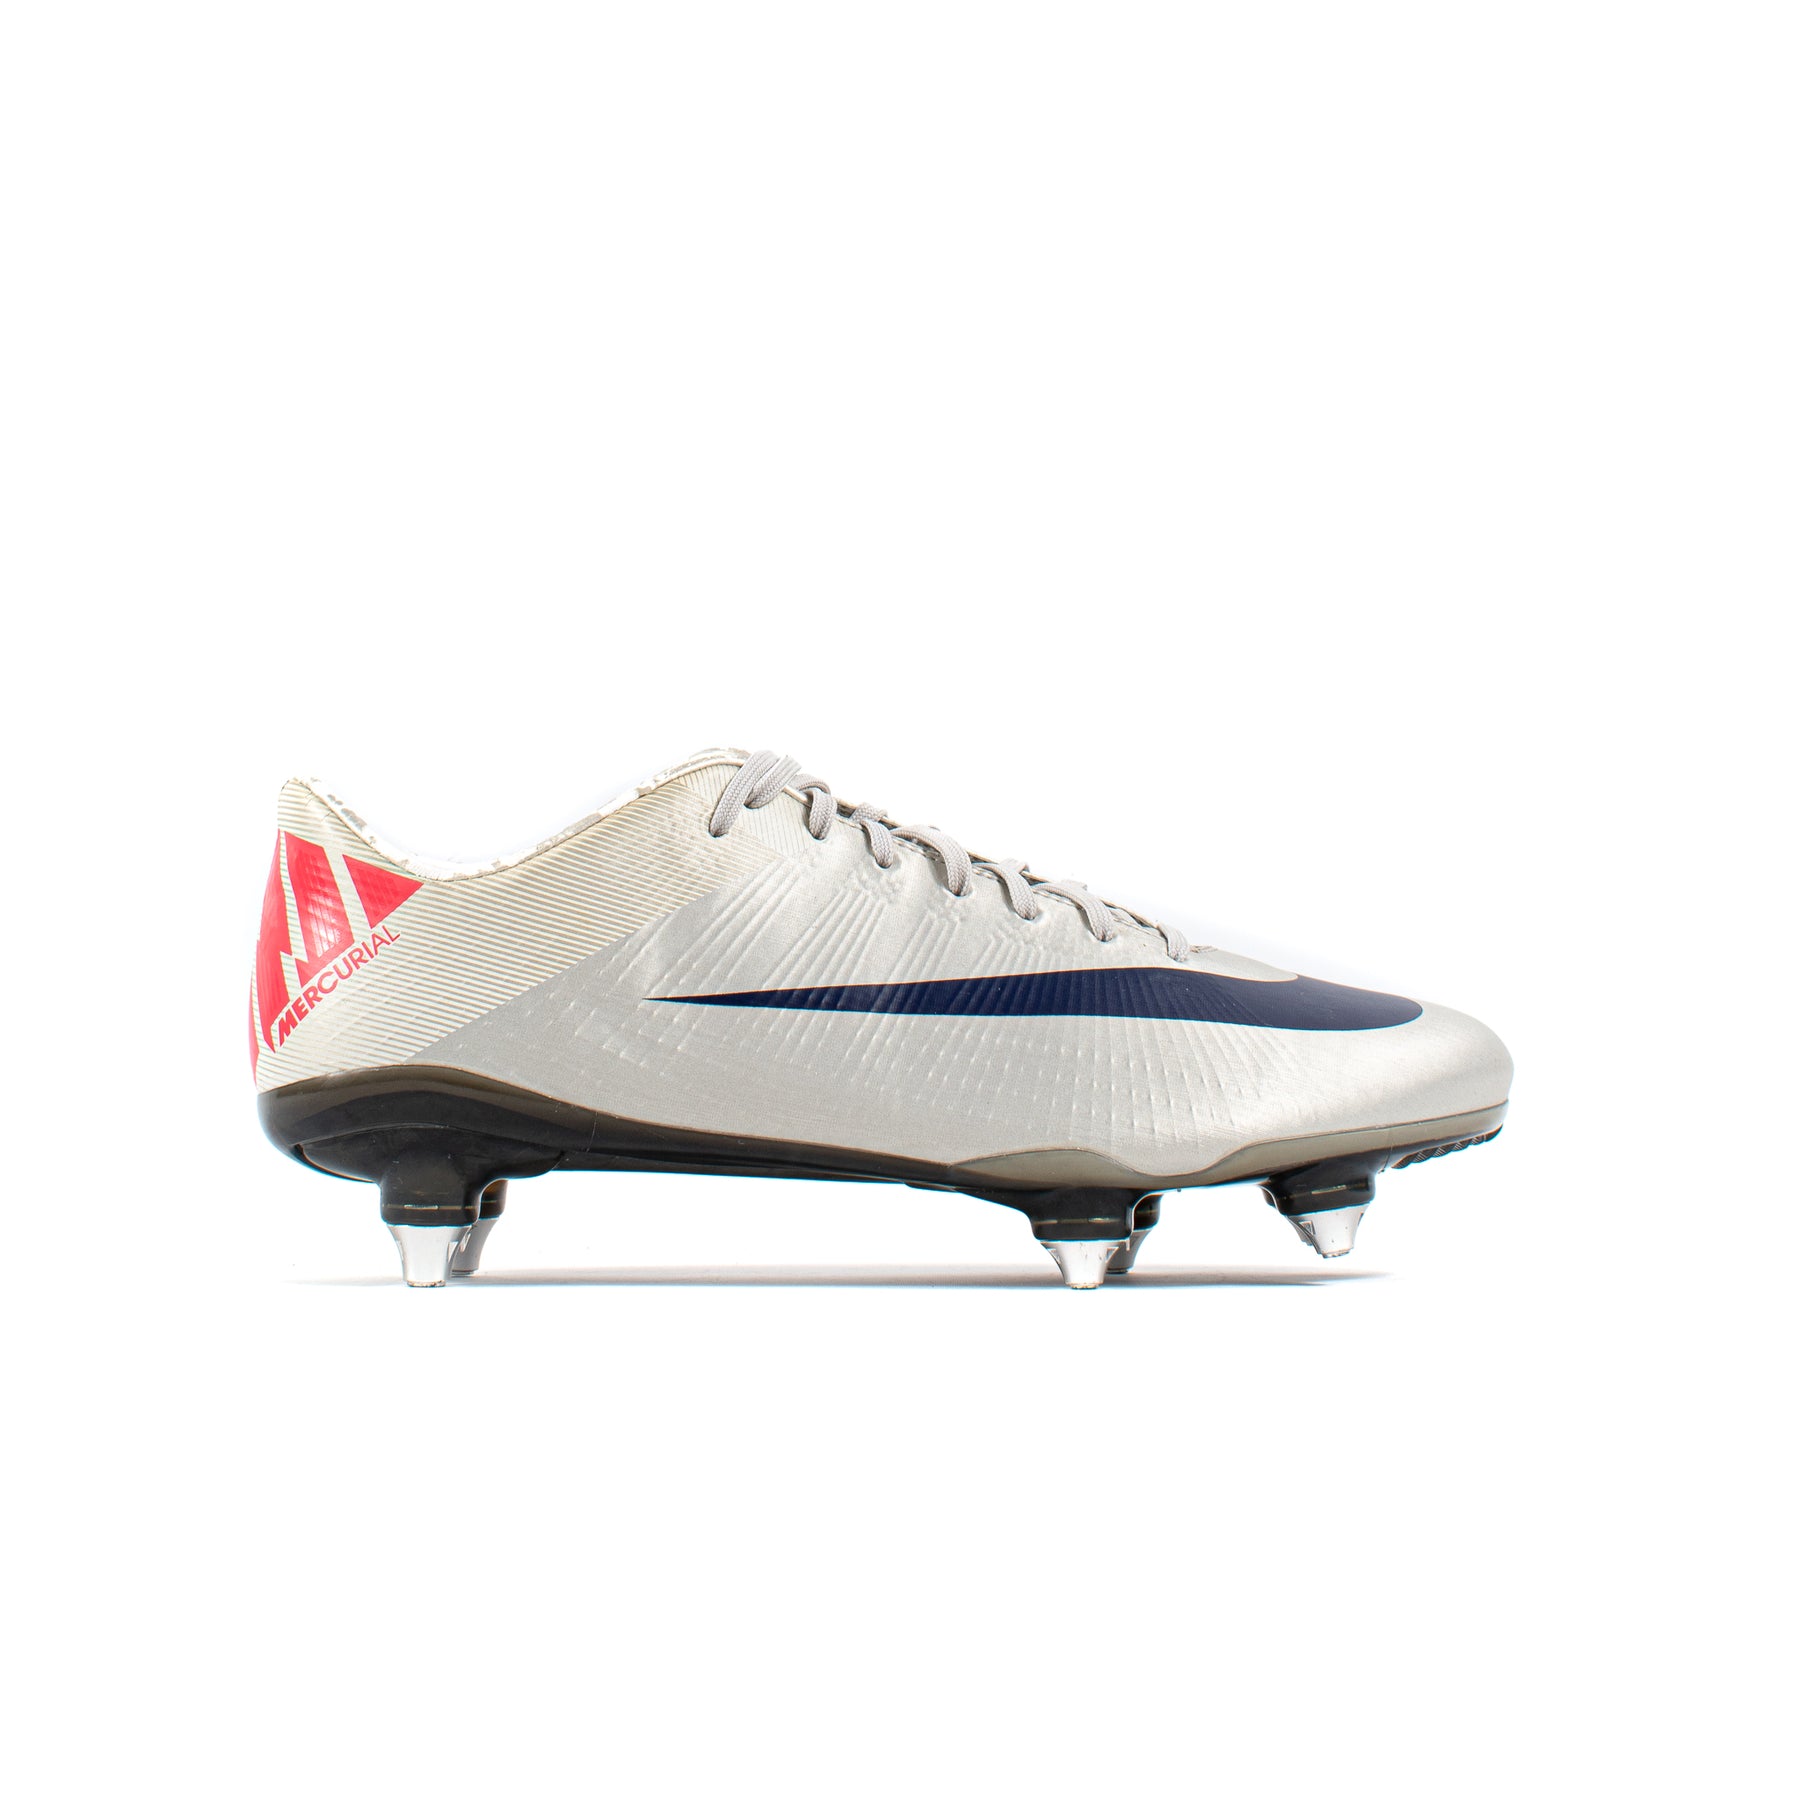 Nike Mercurial Vapor Superfly III Silver Sg - Football Boots/Cleats